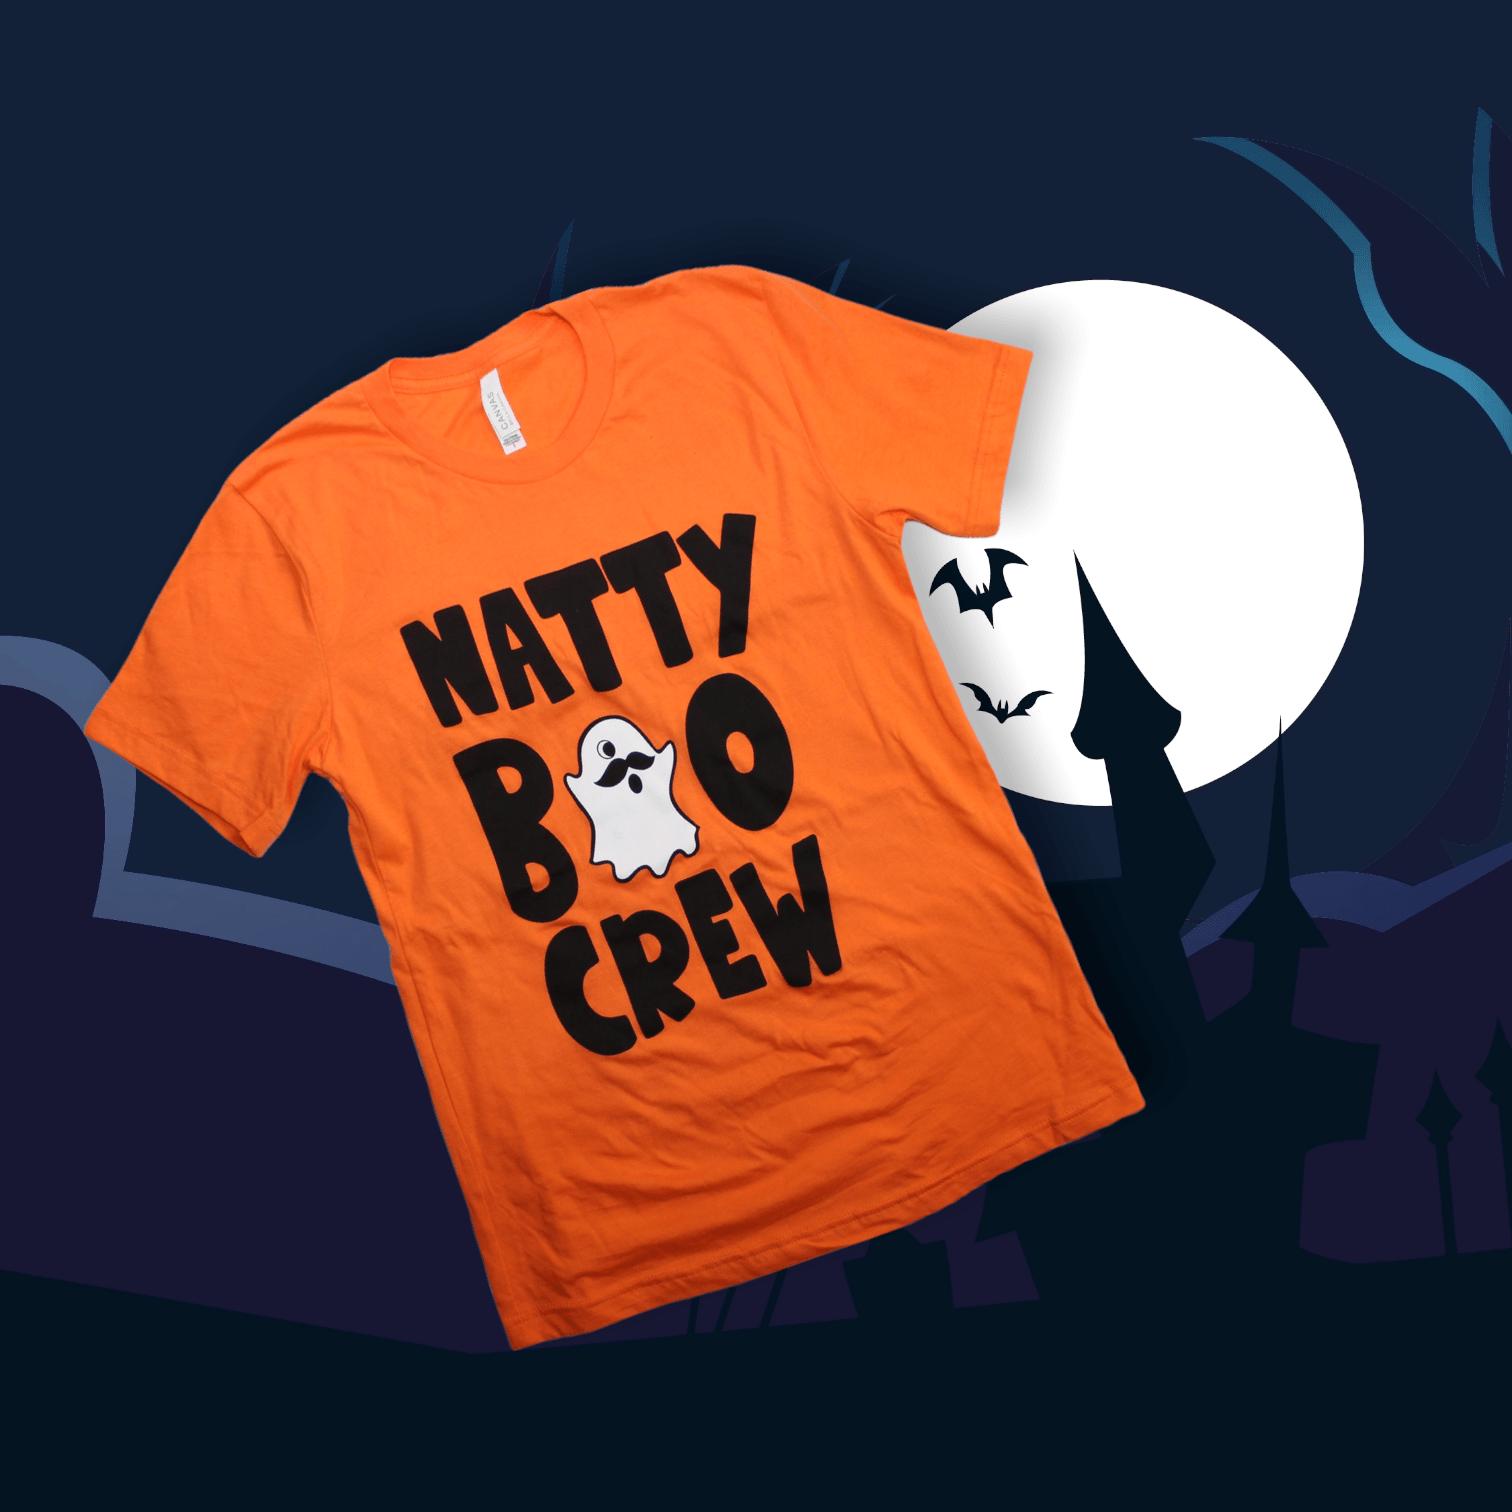 Natty Boo Crew (Orange) / Shirt - Route One Apparel